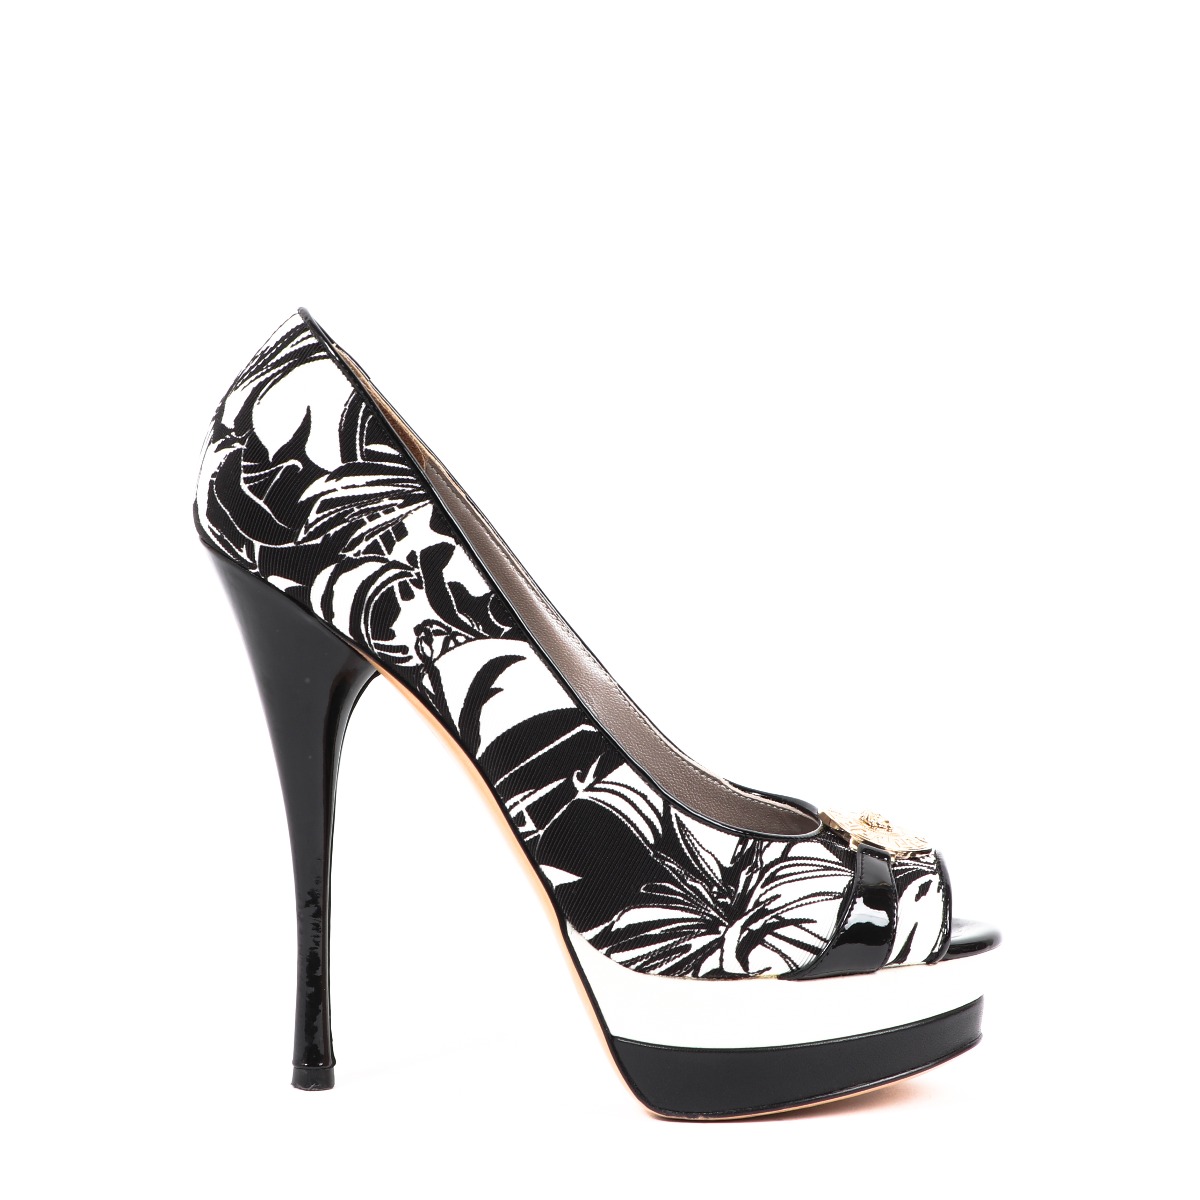 Update more than 118 versace heels black and white best - esthdonghoadian